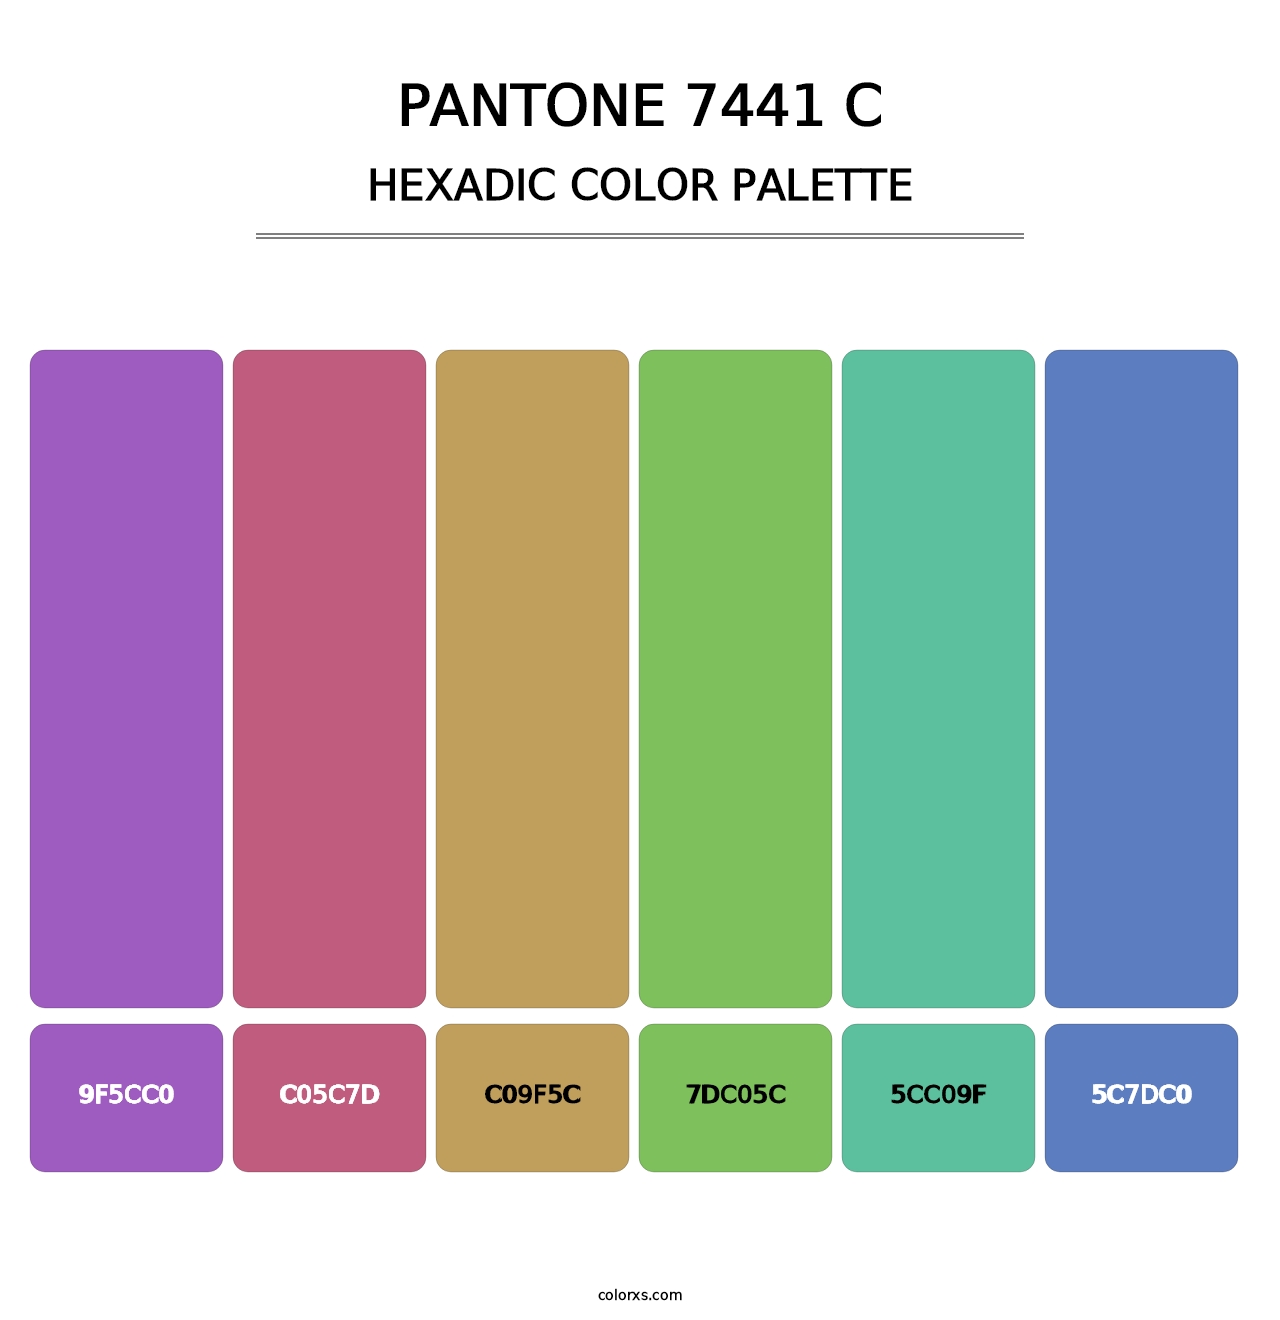 PANTONE 7441 C - Hexadic Color Palette